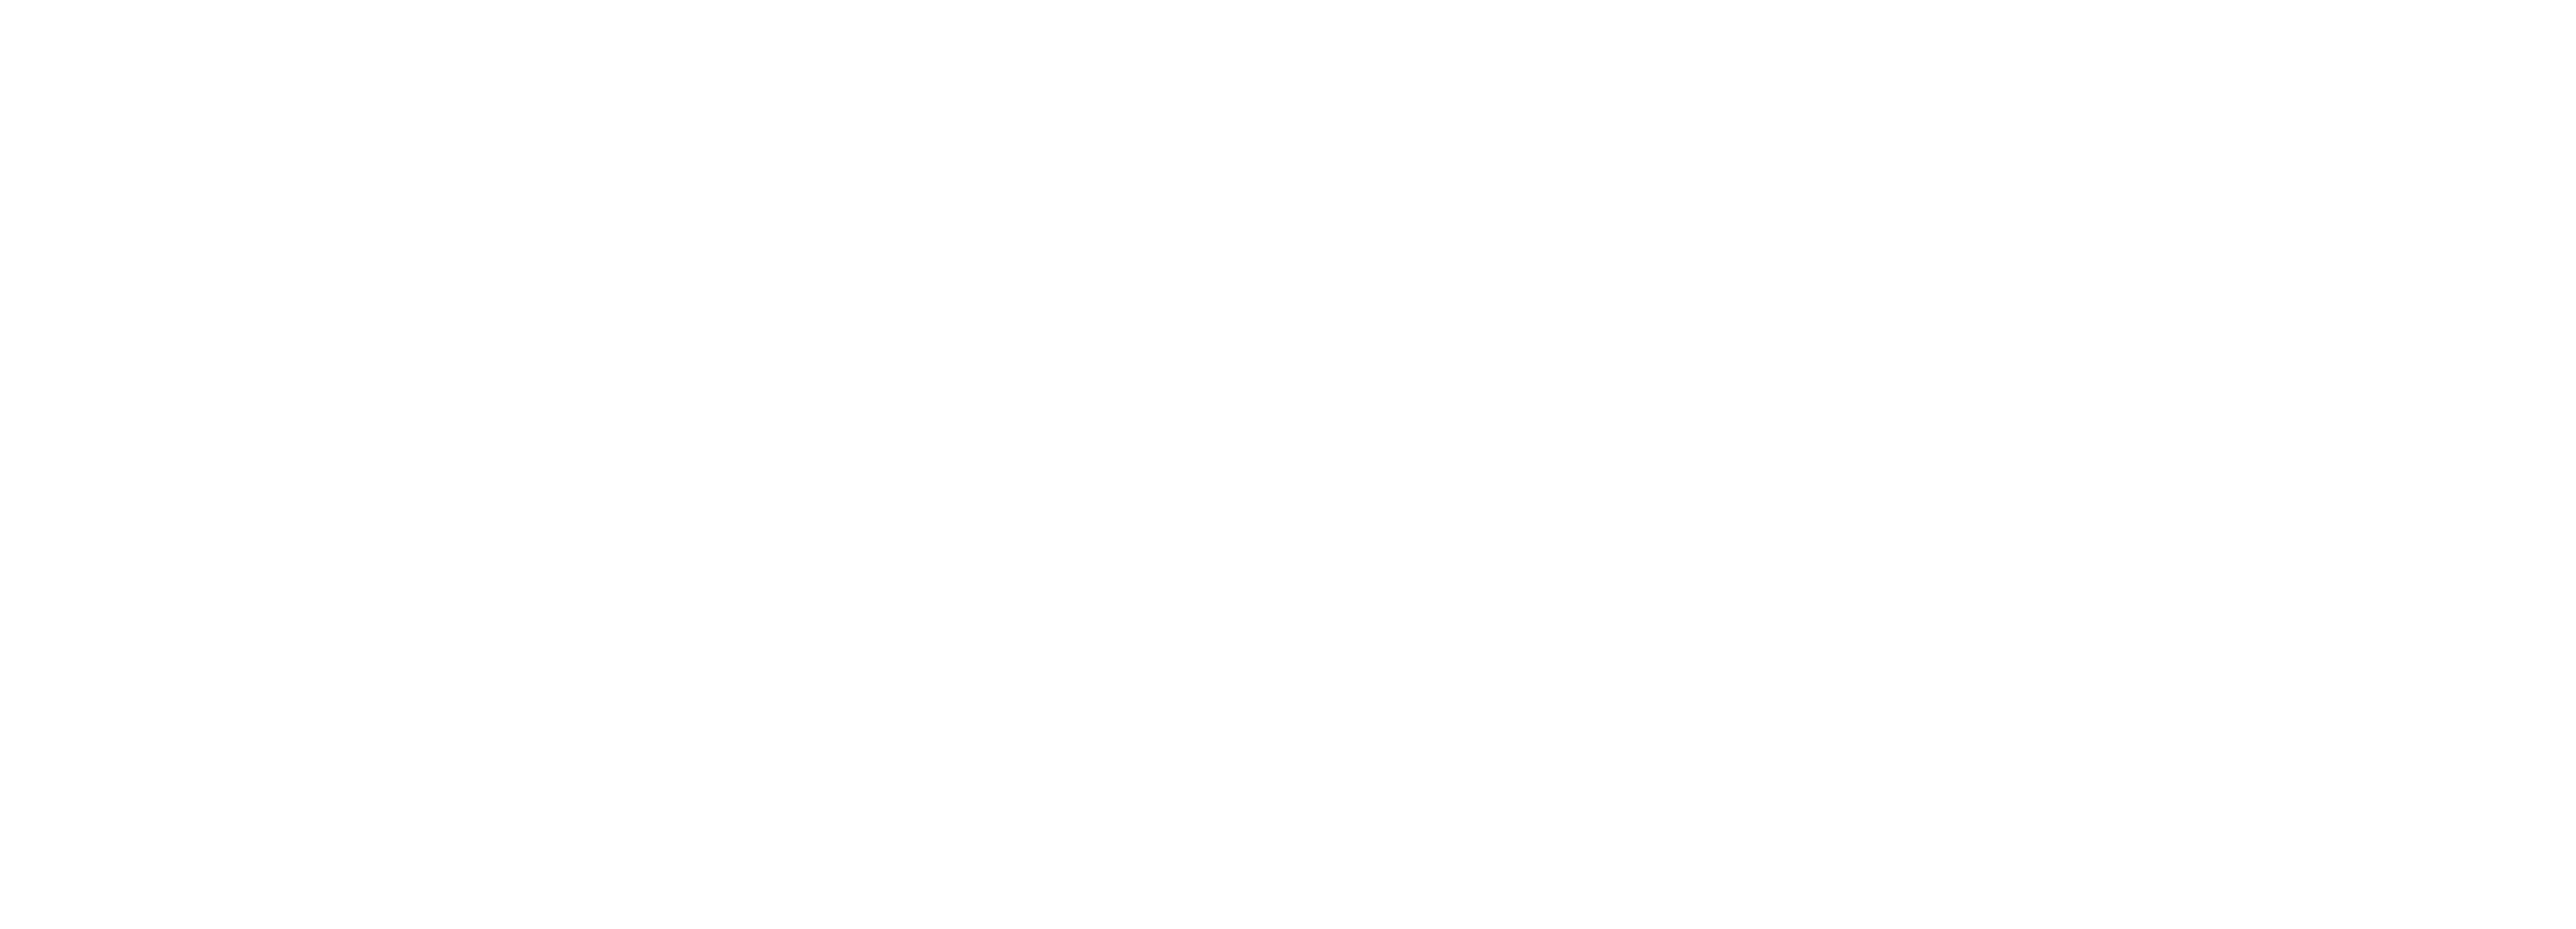 Anderson University Nicholson Library